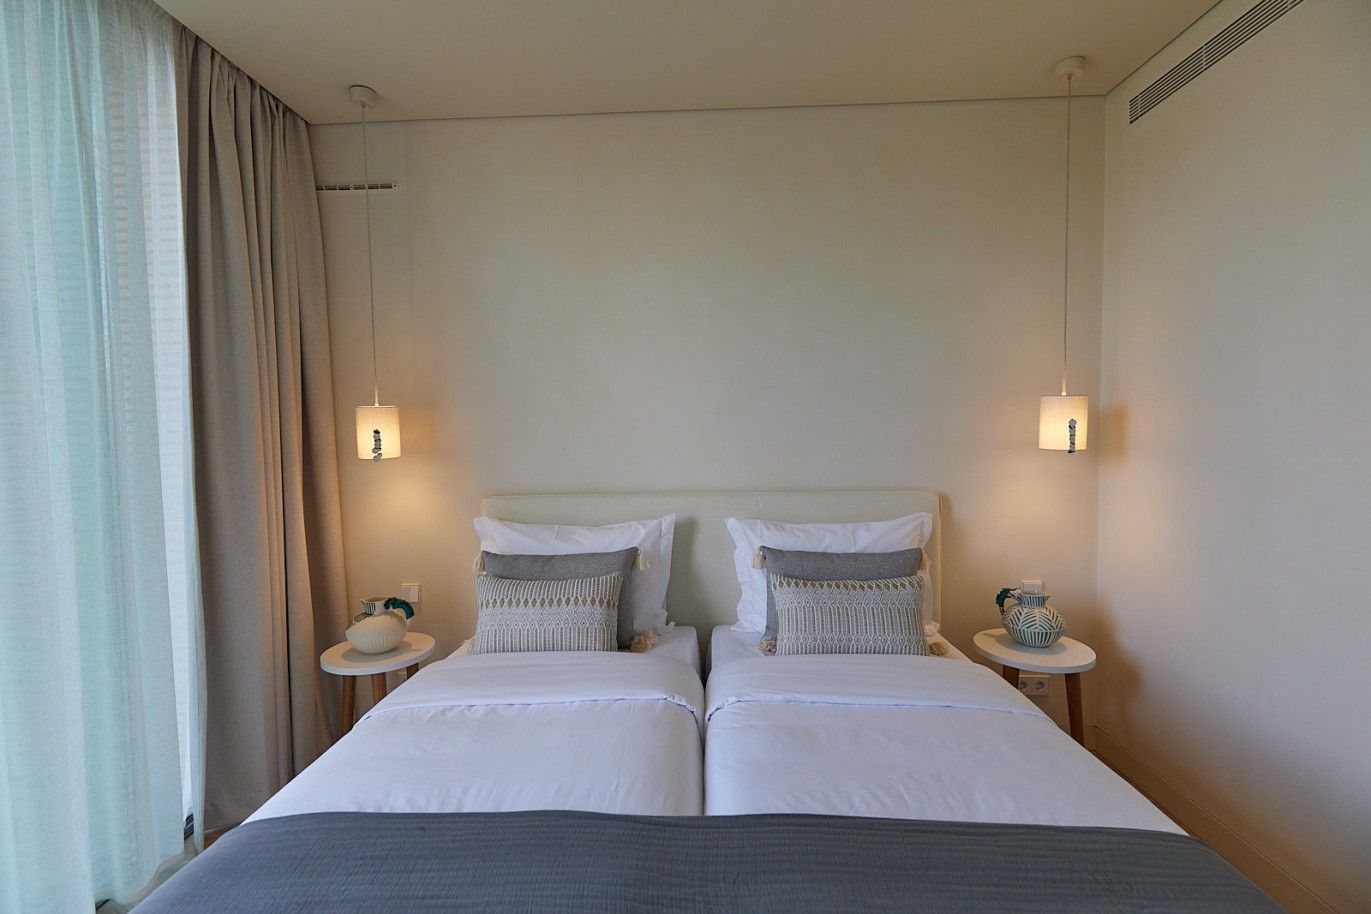 2 bedroom apartment in resort, for sale in Porches, Algarve_230784